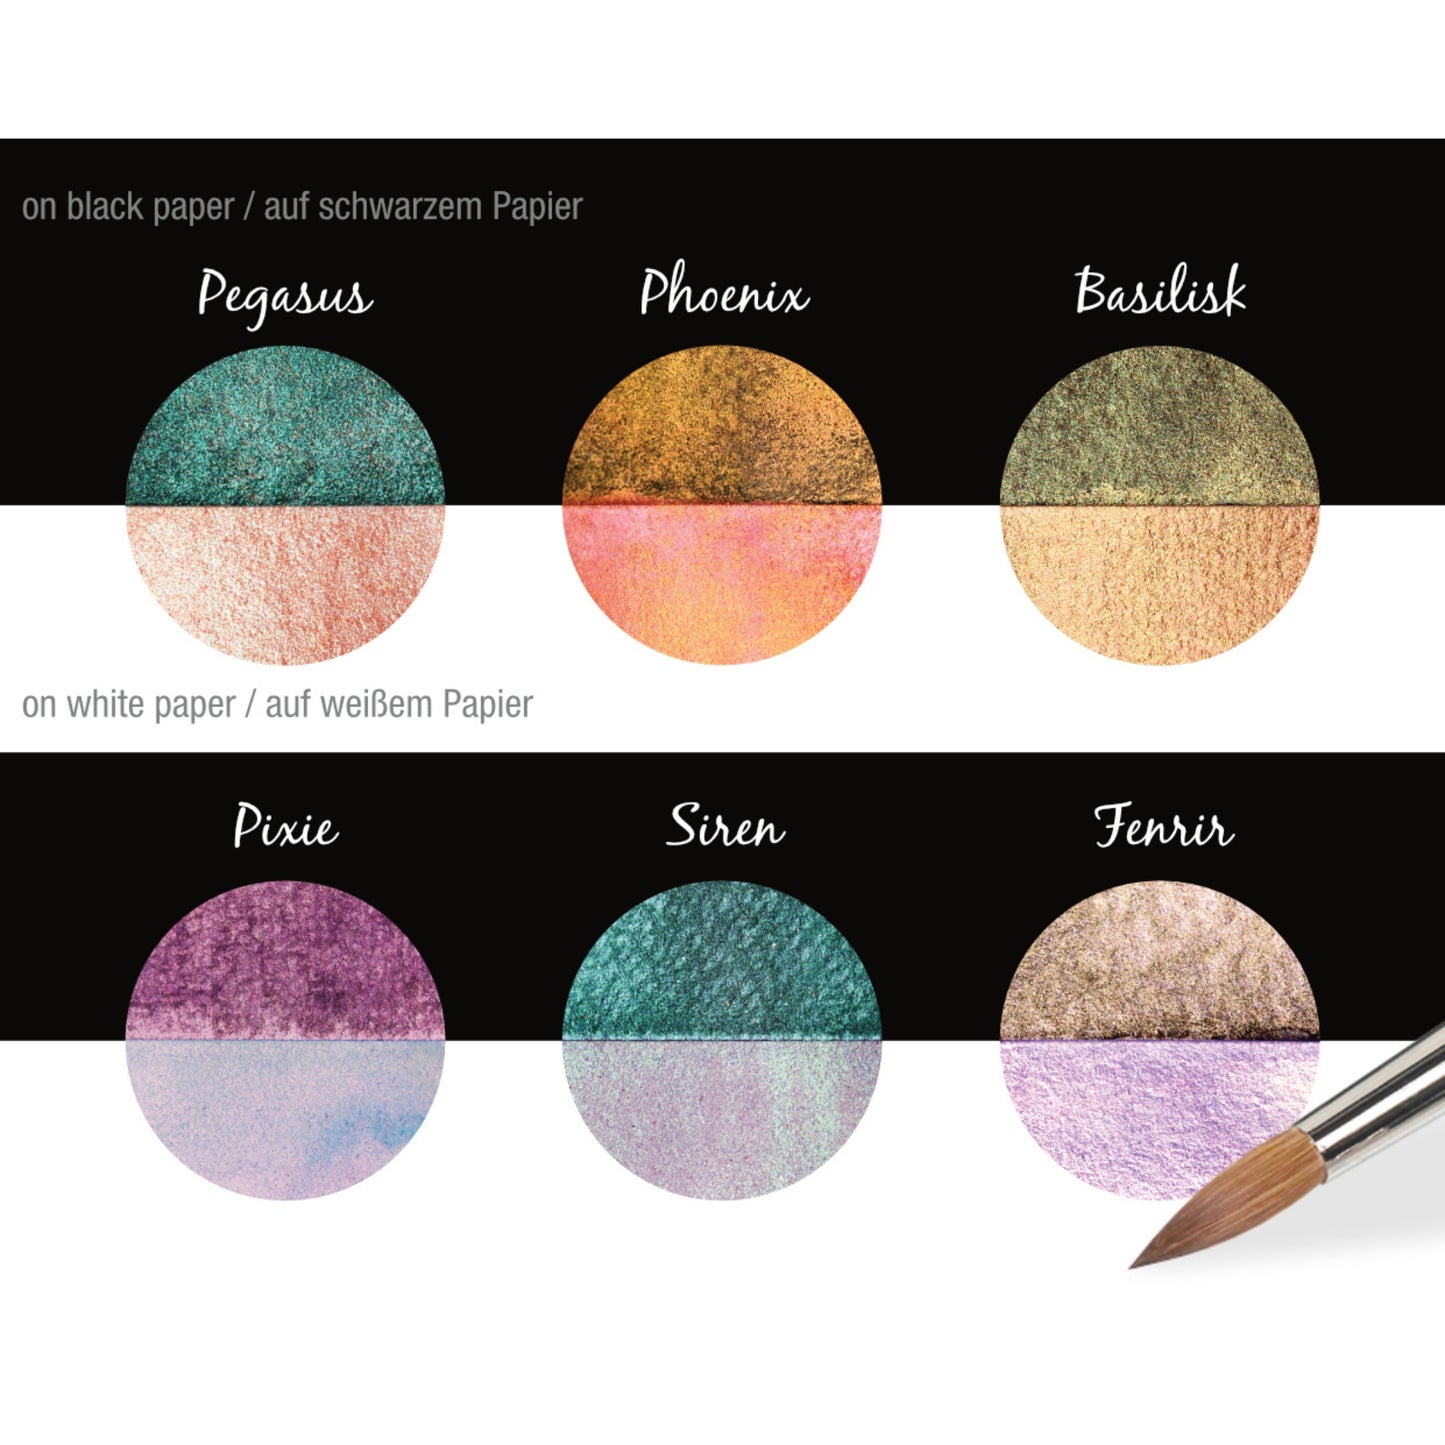 Coliro® Pearlcolors - 6er Set: Magical World